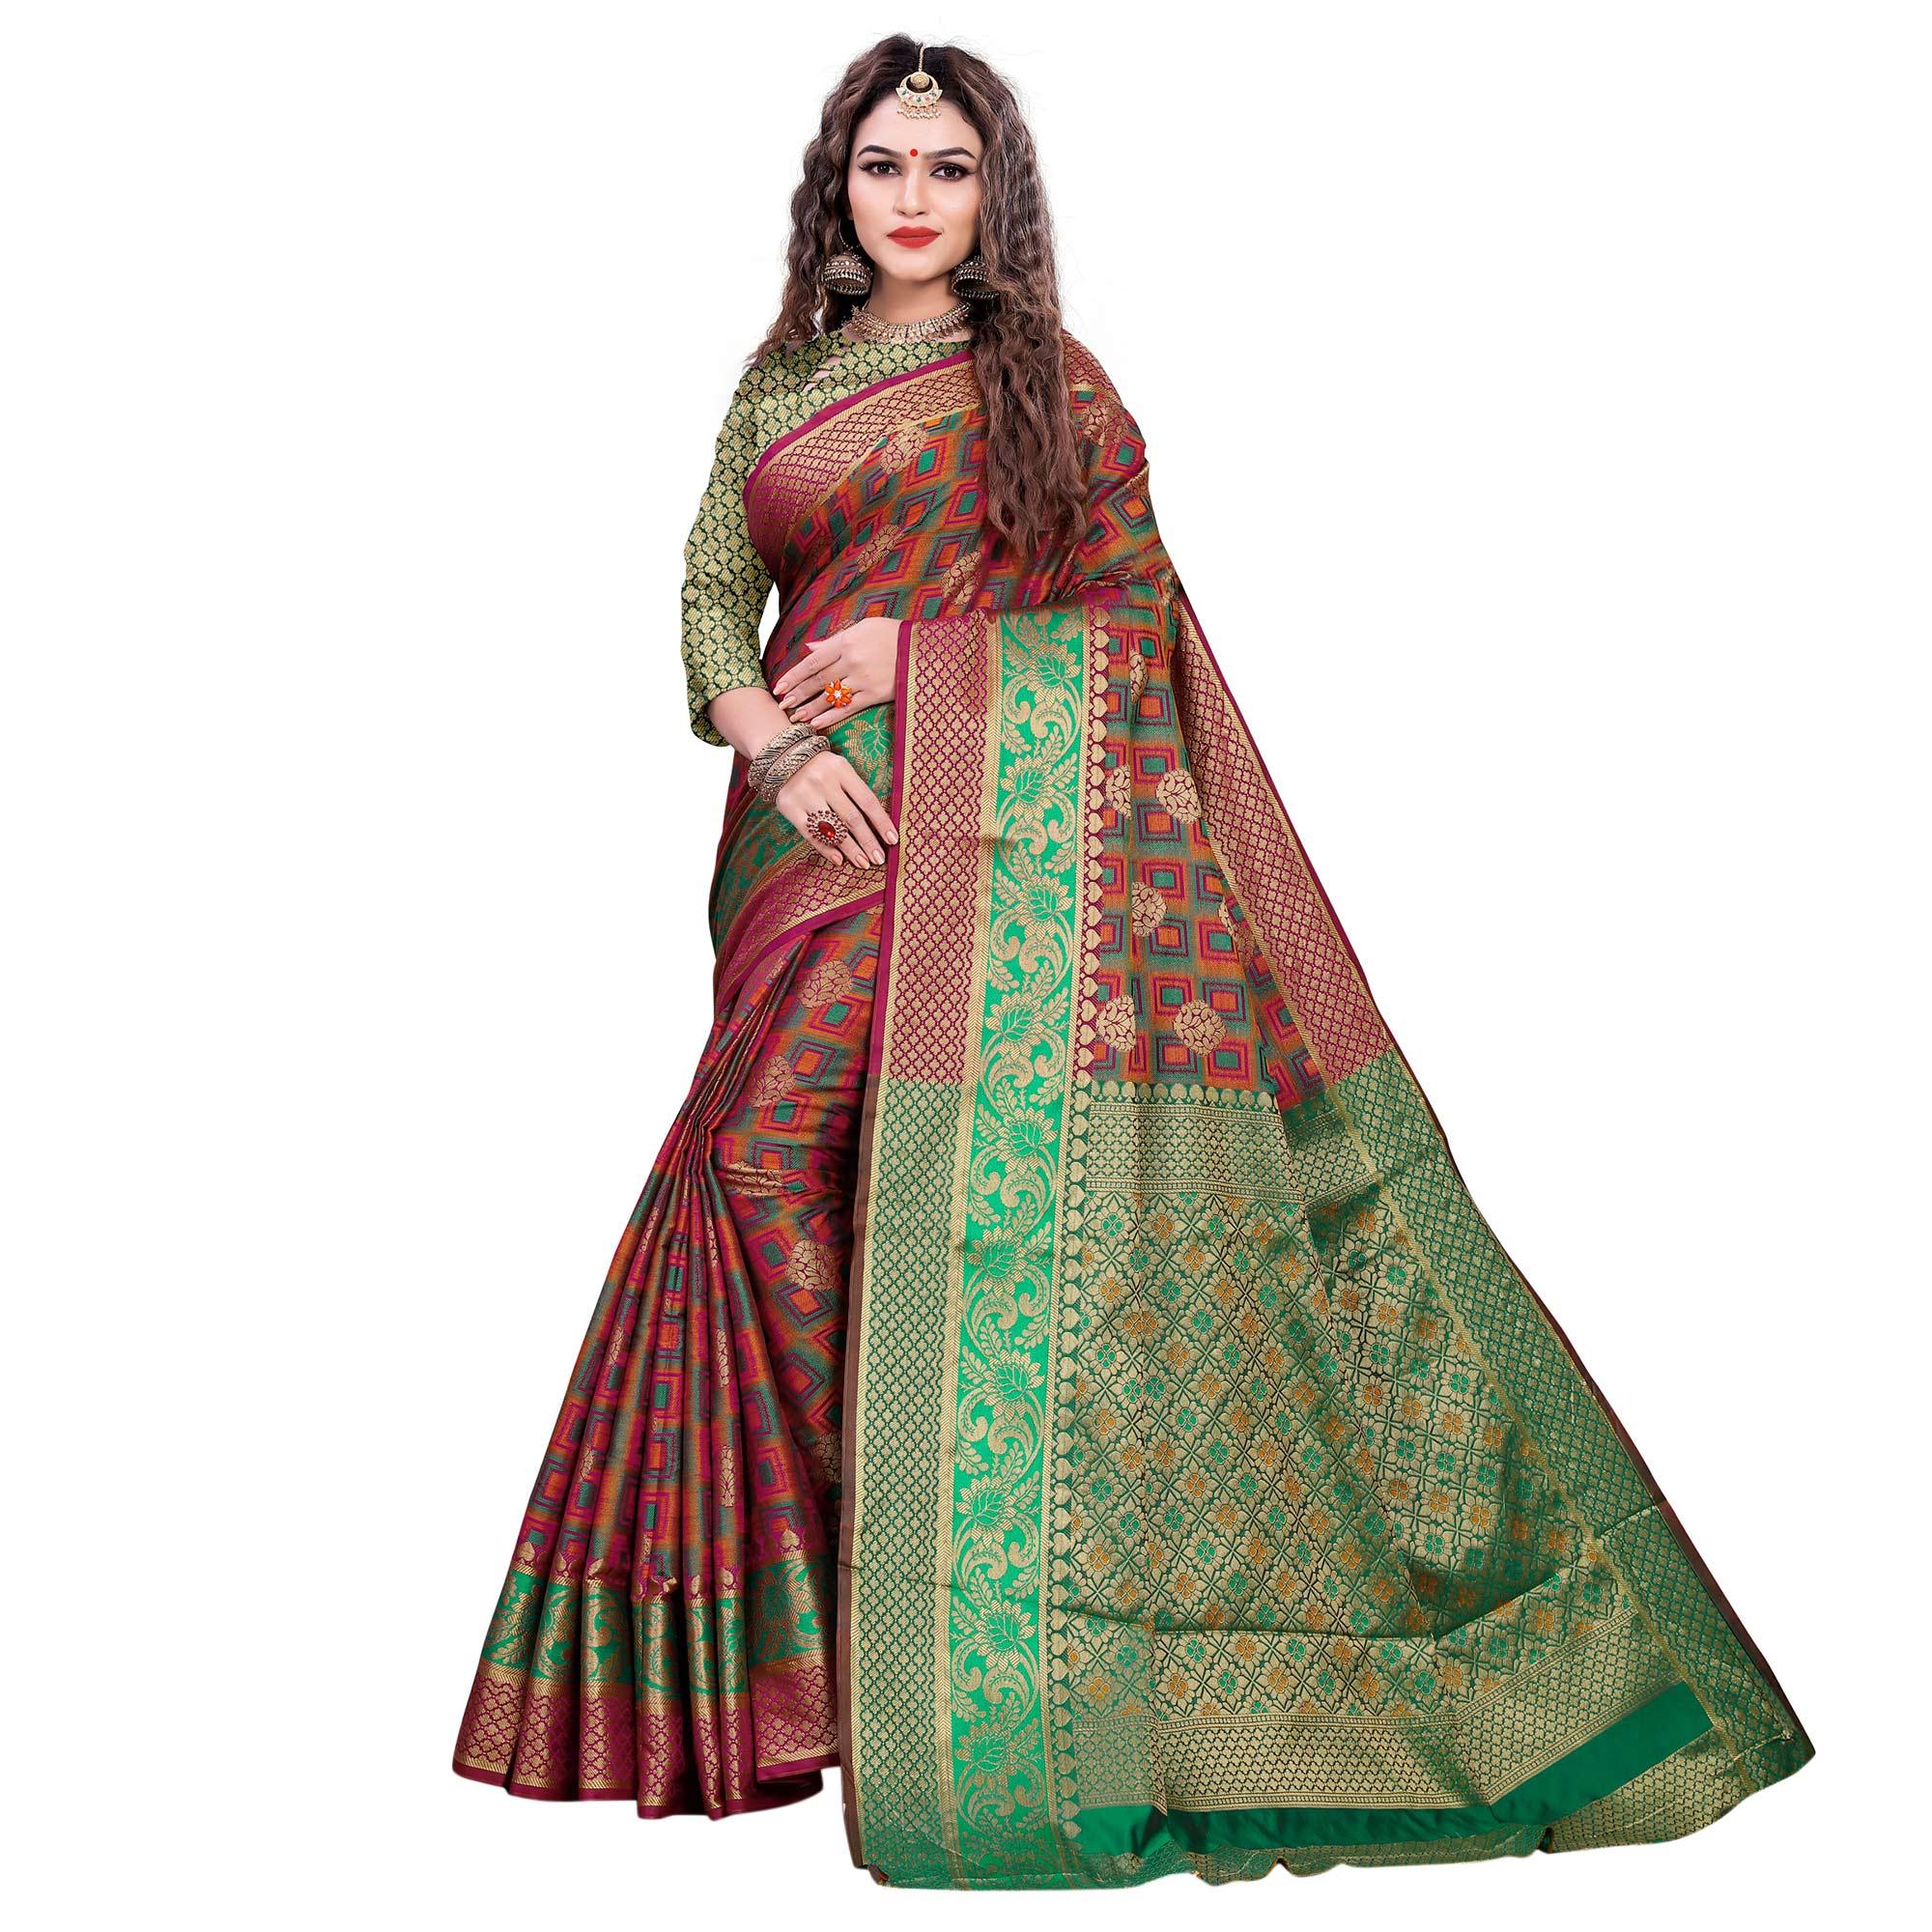 Exceptional Maroon-Green Colored Festive Wear Woven Cotton Silk Jacquard Saree - Peachmode